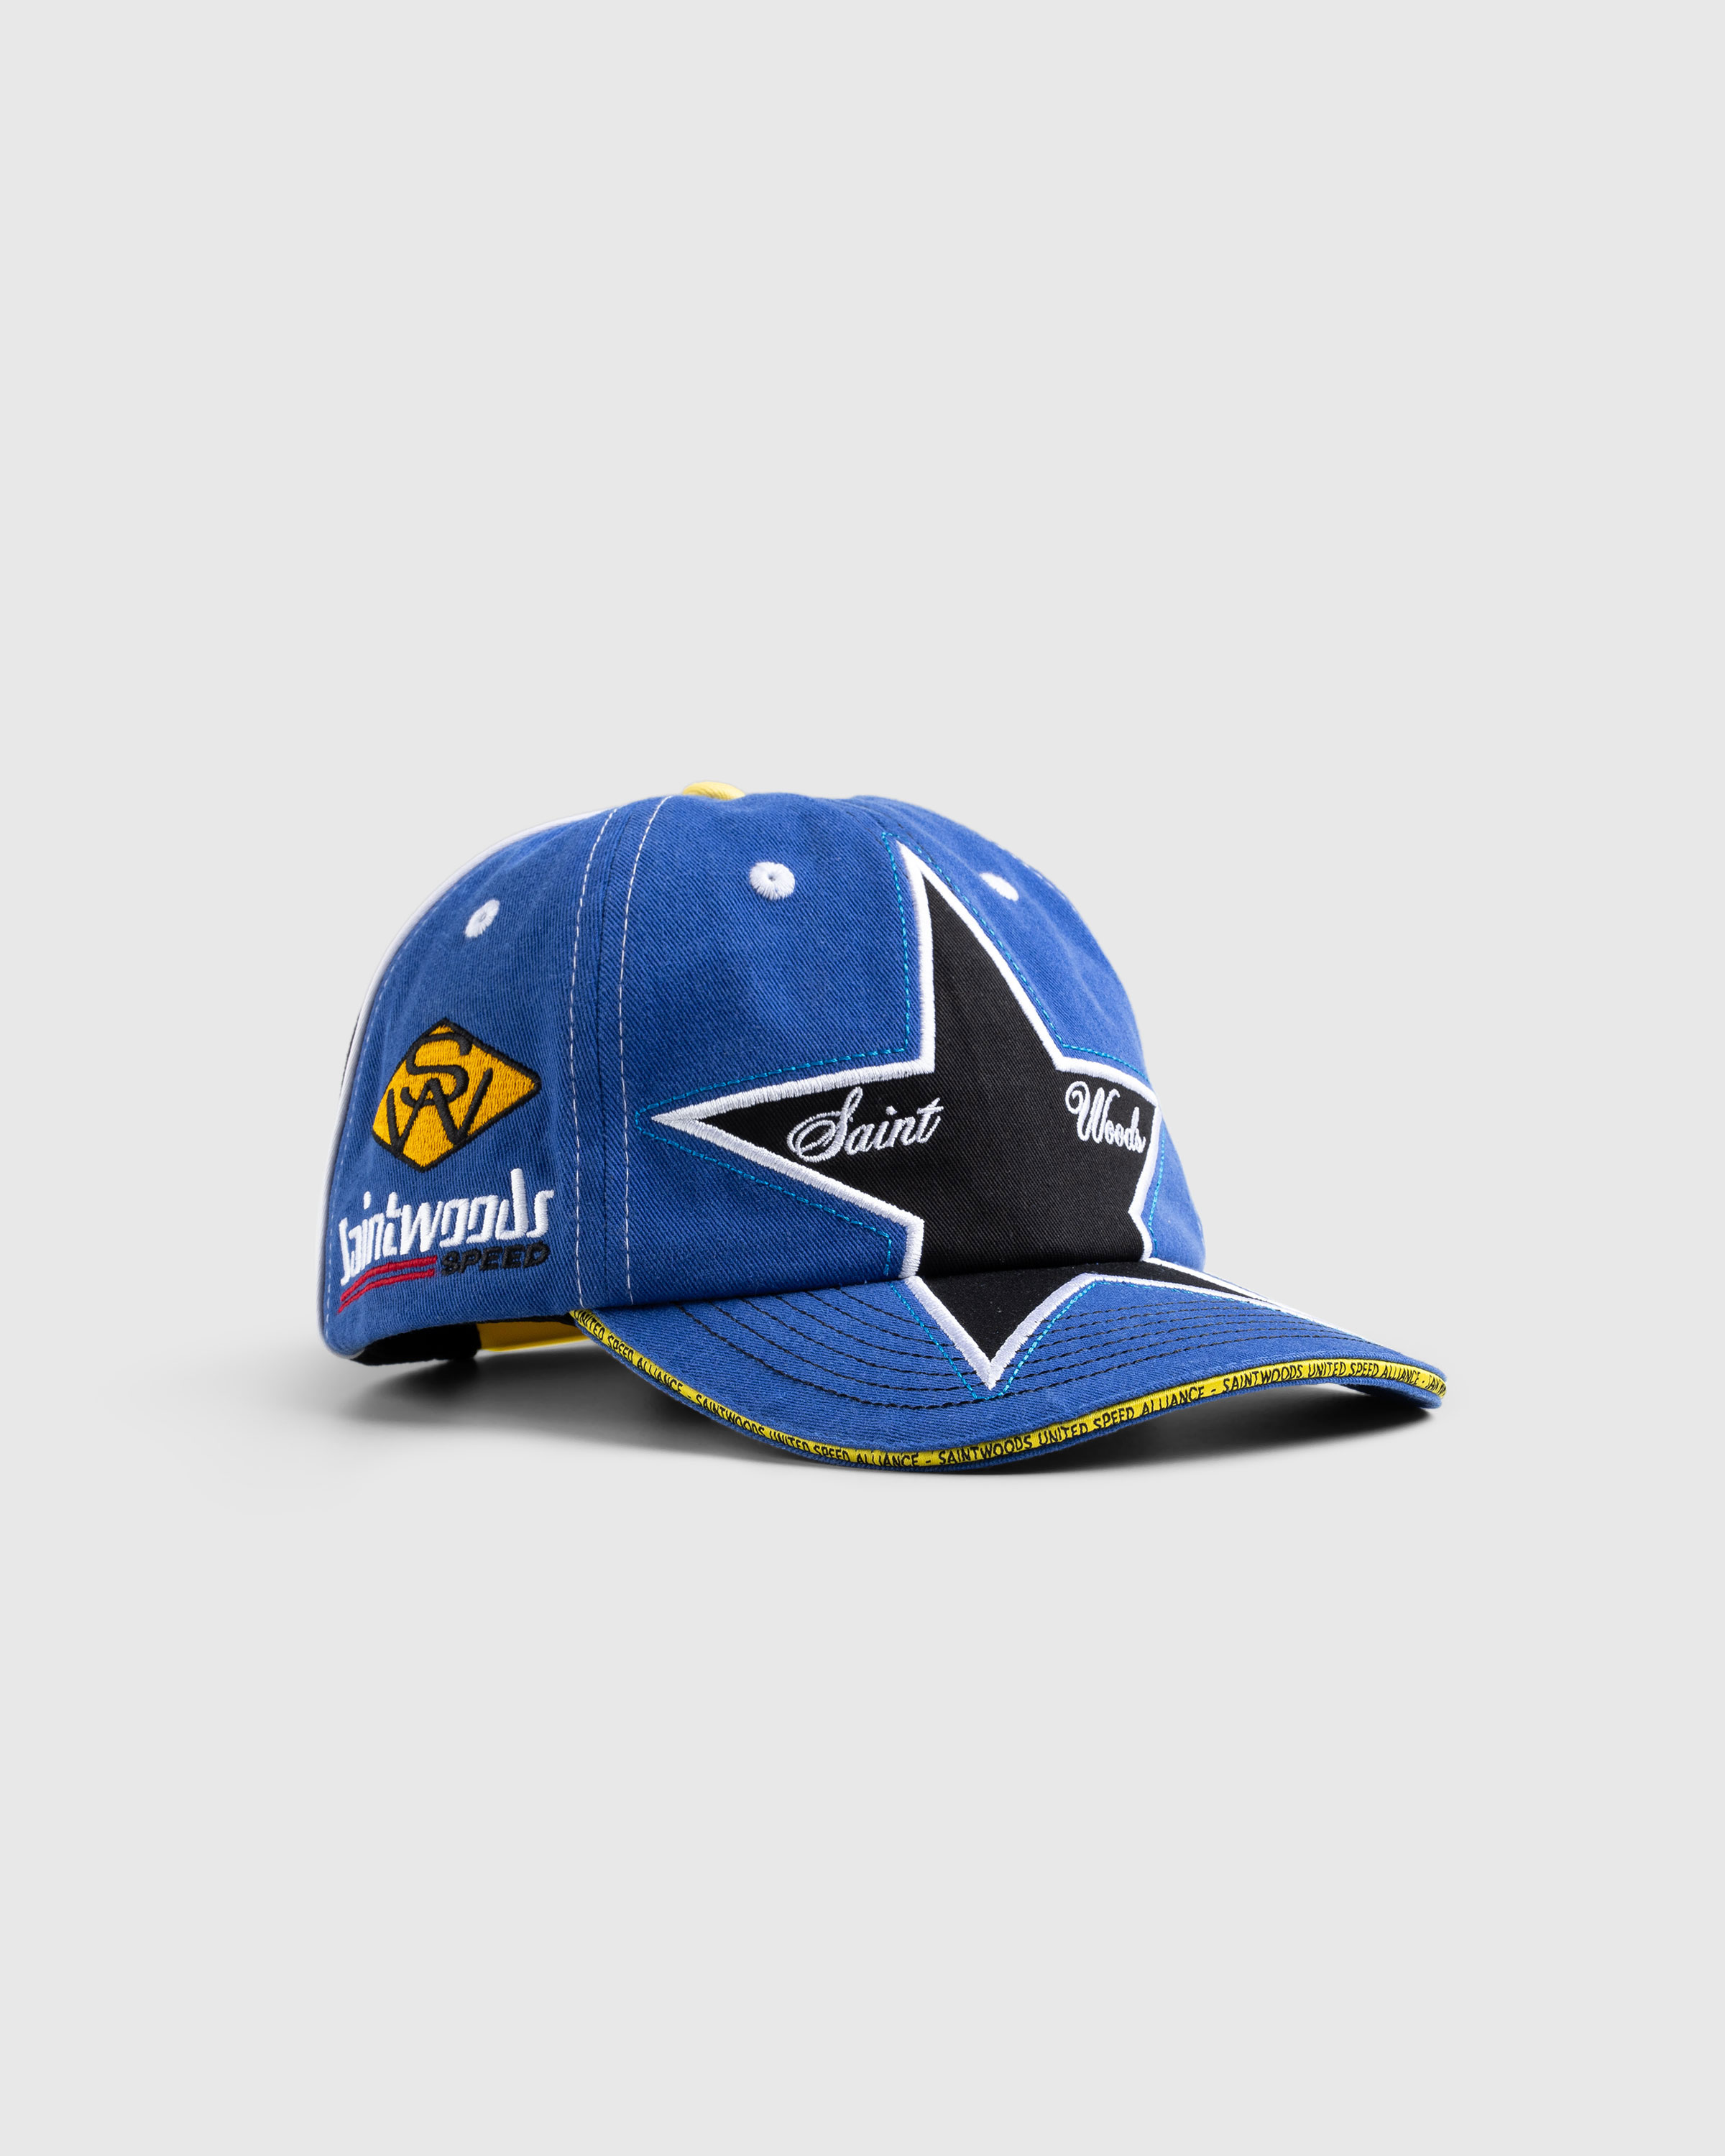 Saintwoods - SW Dream Hat Blue/Black - Accessories - Blue - Image 1